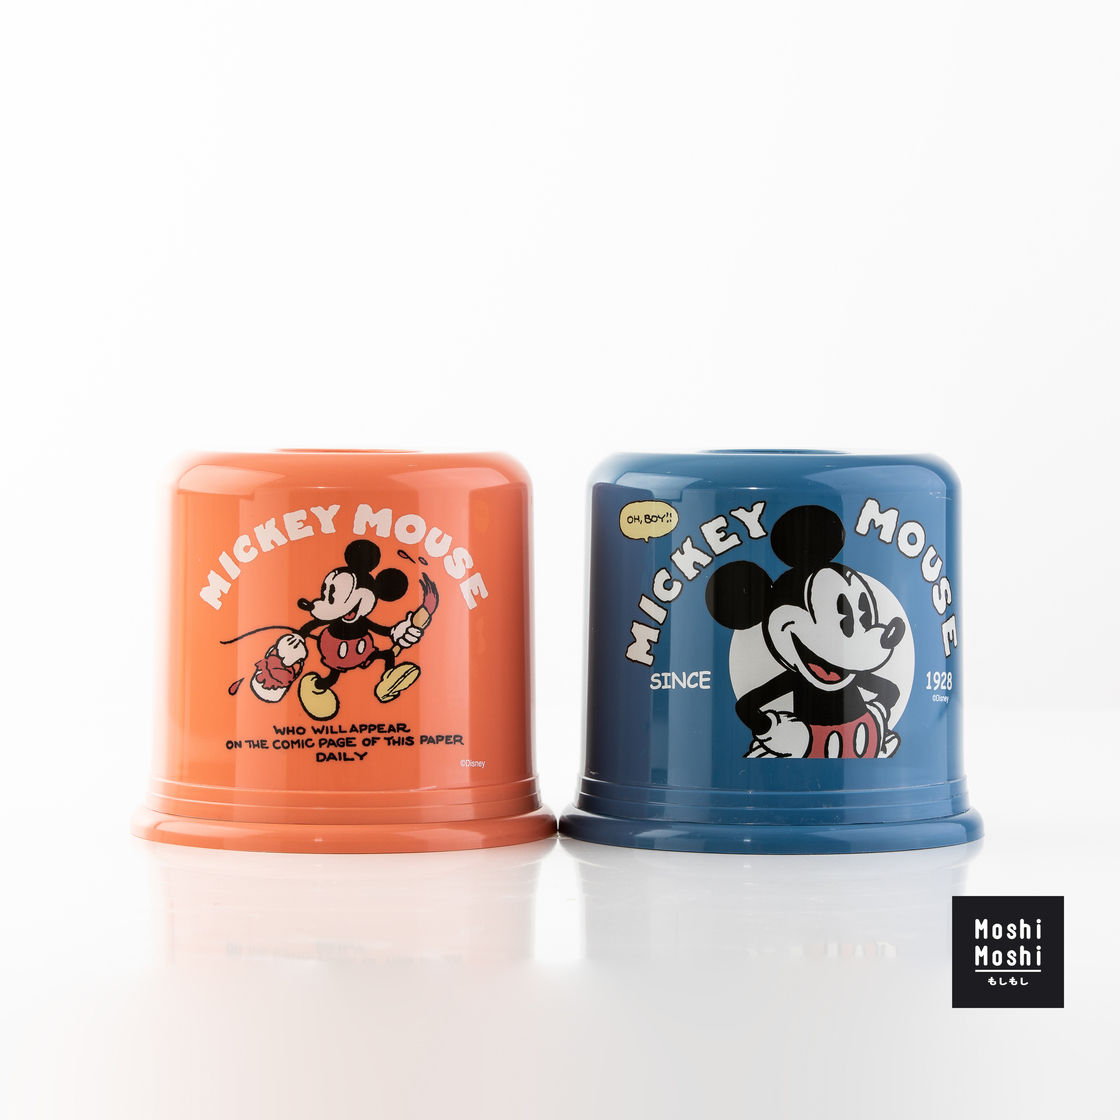 Moshi Moshi กล่องใส่ทิชชู่ทรงกลม ลาย Mickey Mouse ลิขสิทธิ์แท้จากค่าย Disney รุ่น 6100000272-0273